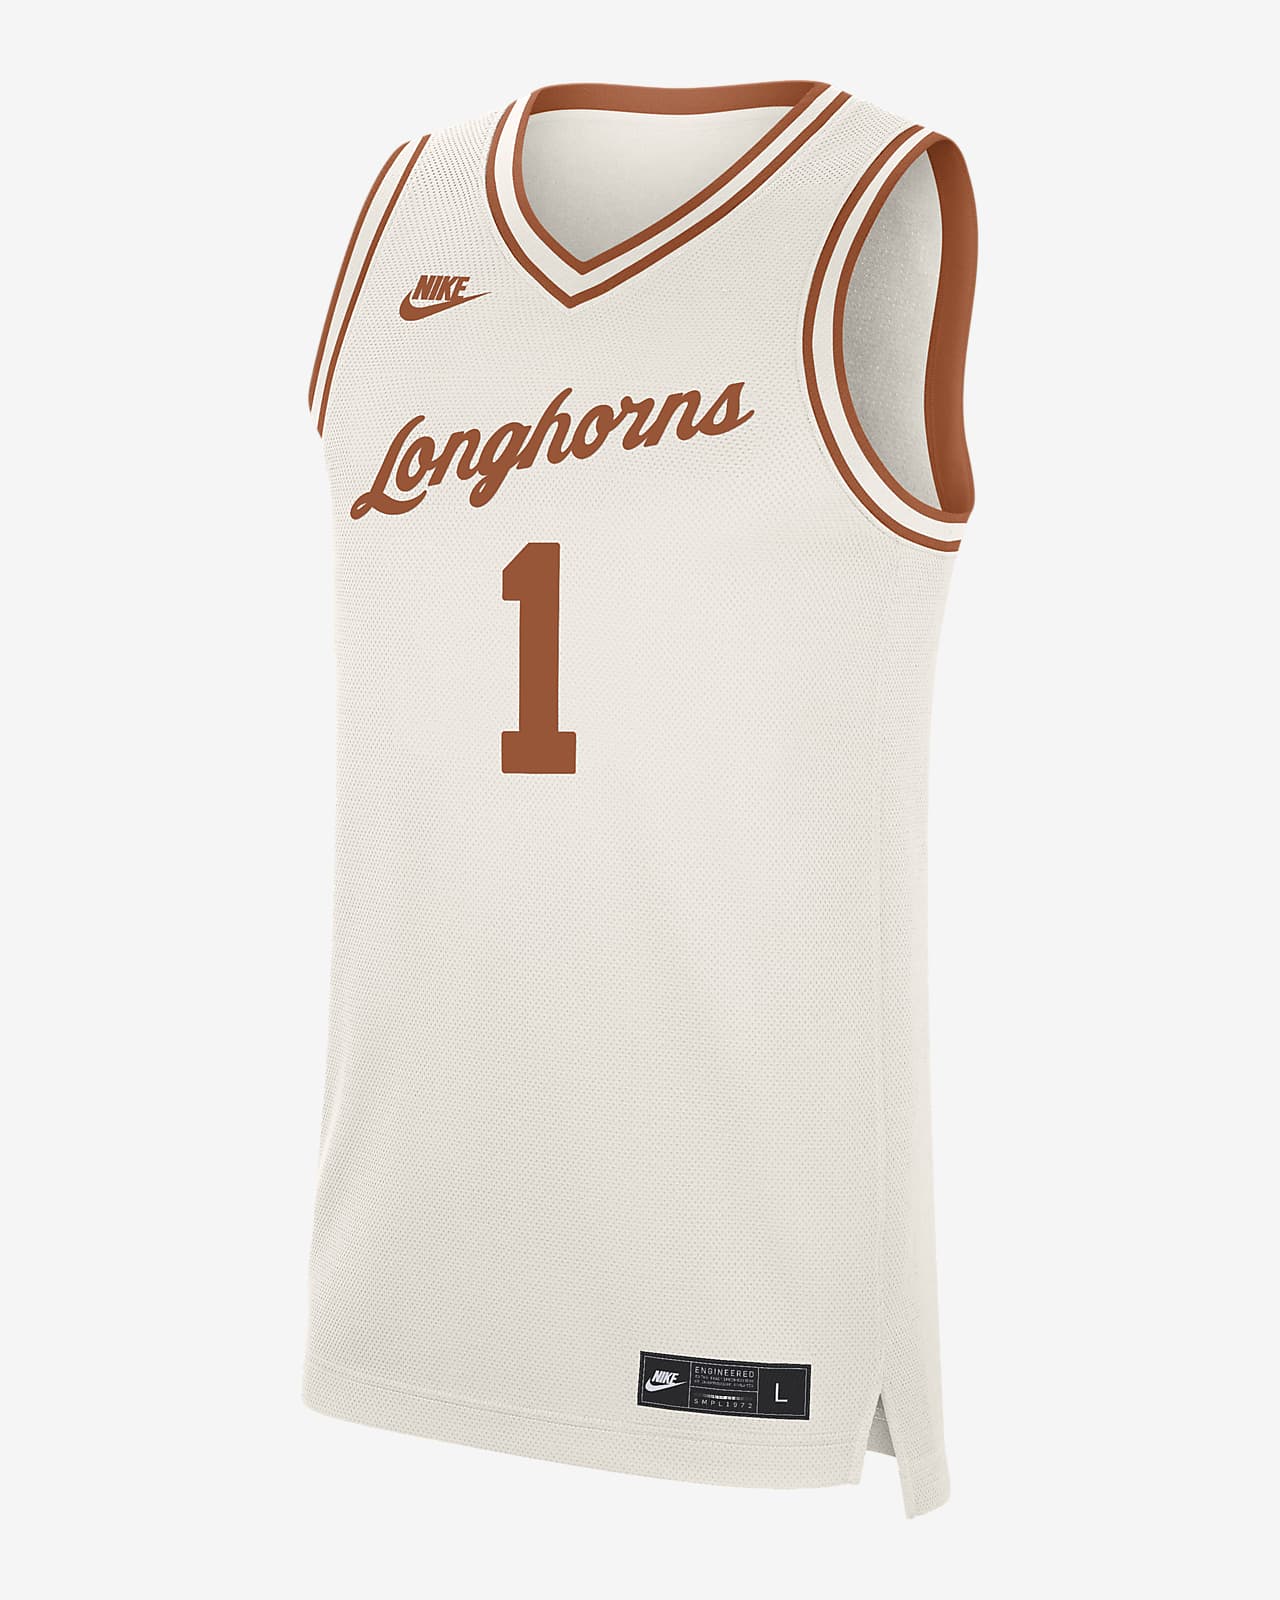 texas longhorns basketball jerseys